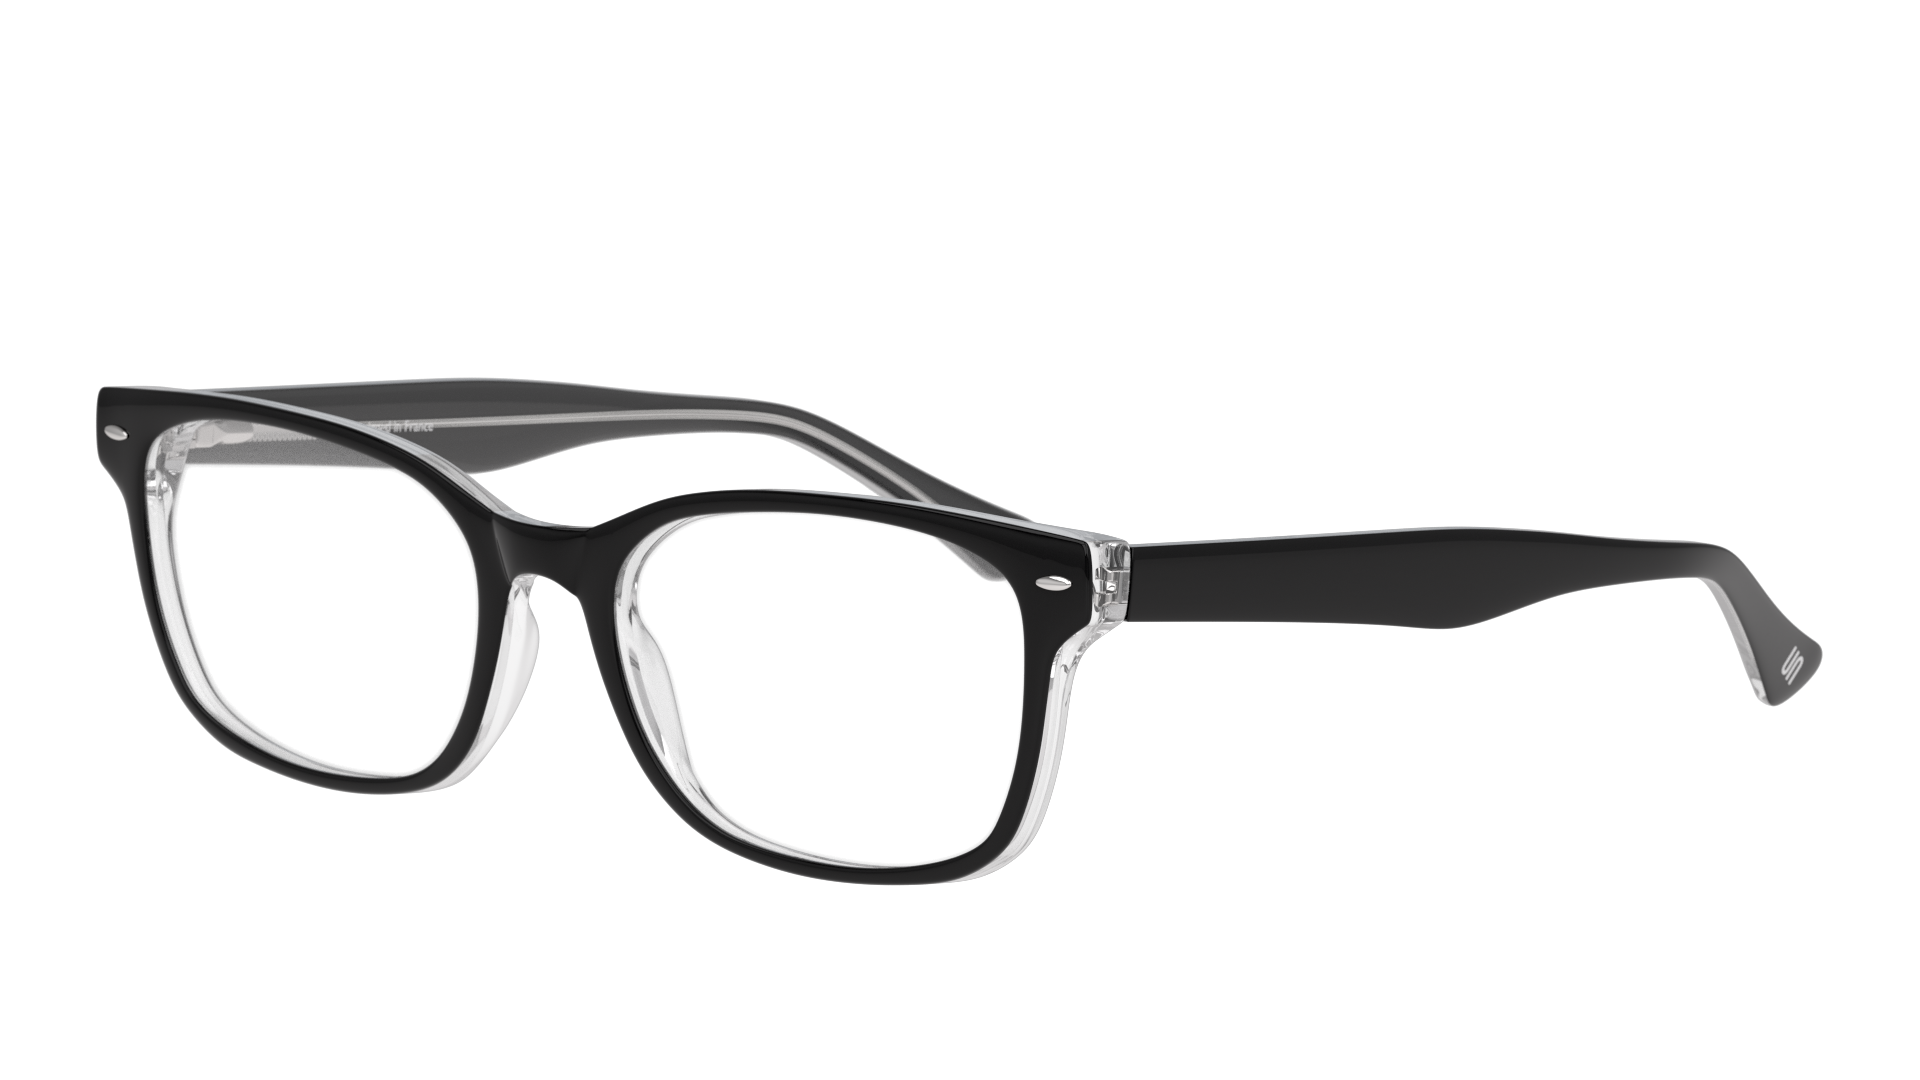 Angle_Left01 Unofficial UNOM0012 Glasses Transparent / Black